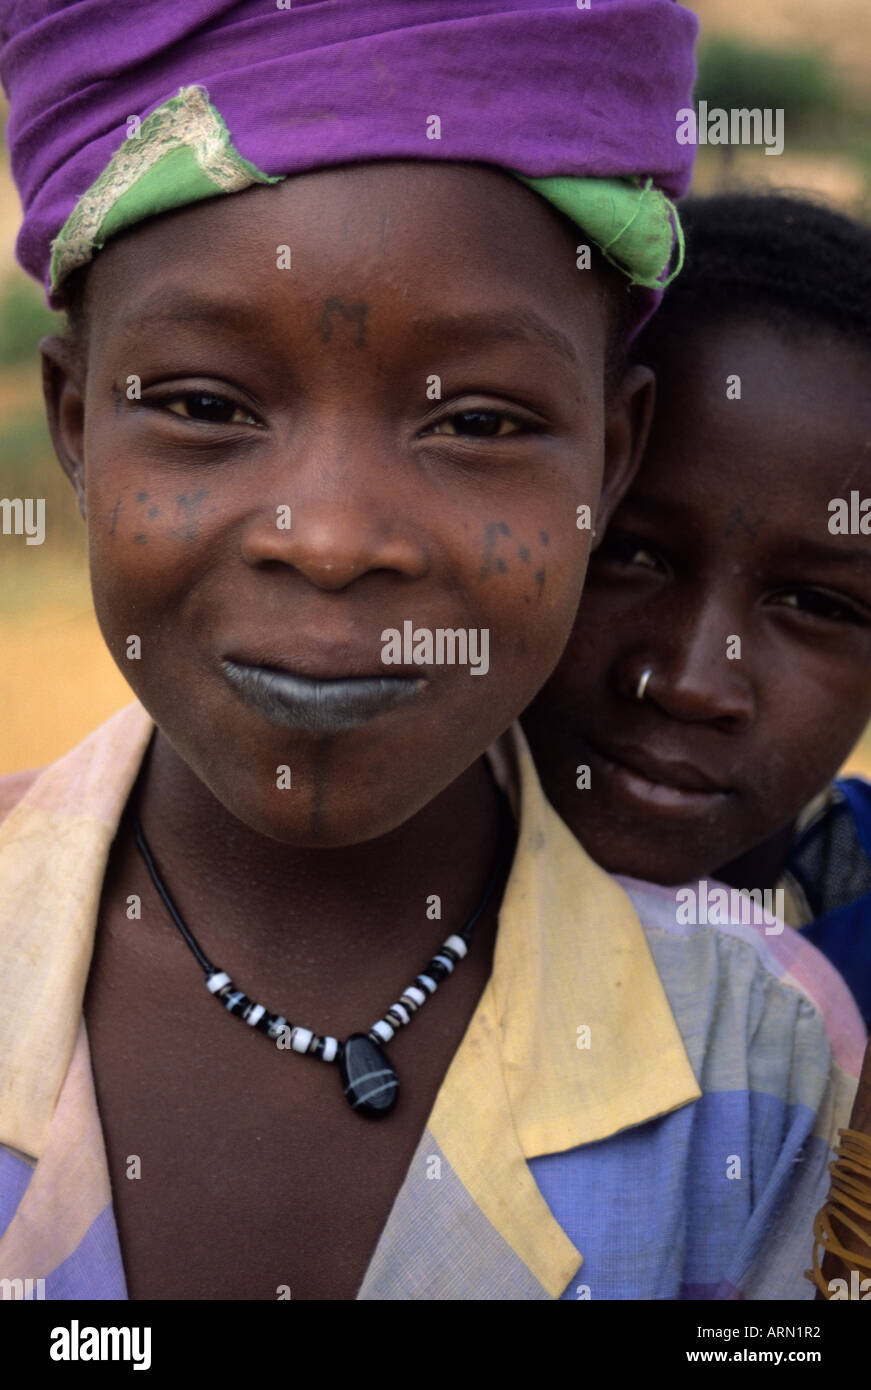 Near Niamey, Niger, Africa. Fulani Girls with Facial Scarification, Tattoos, Nose Ring. Stock Photo